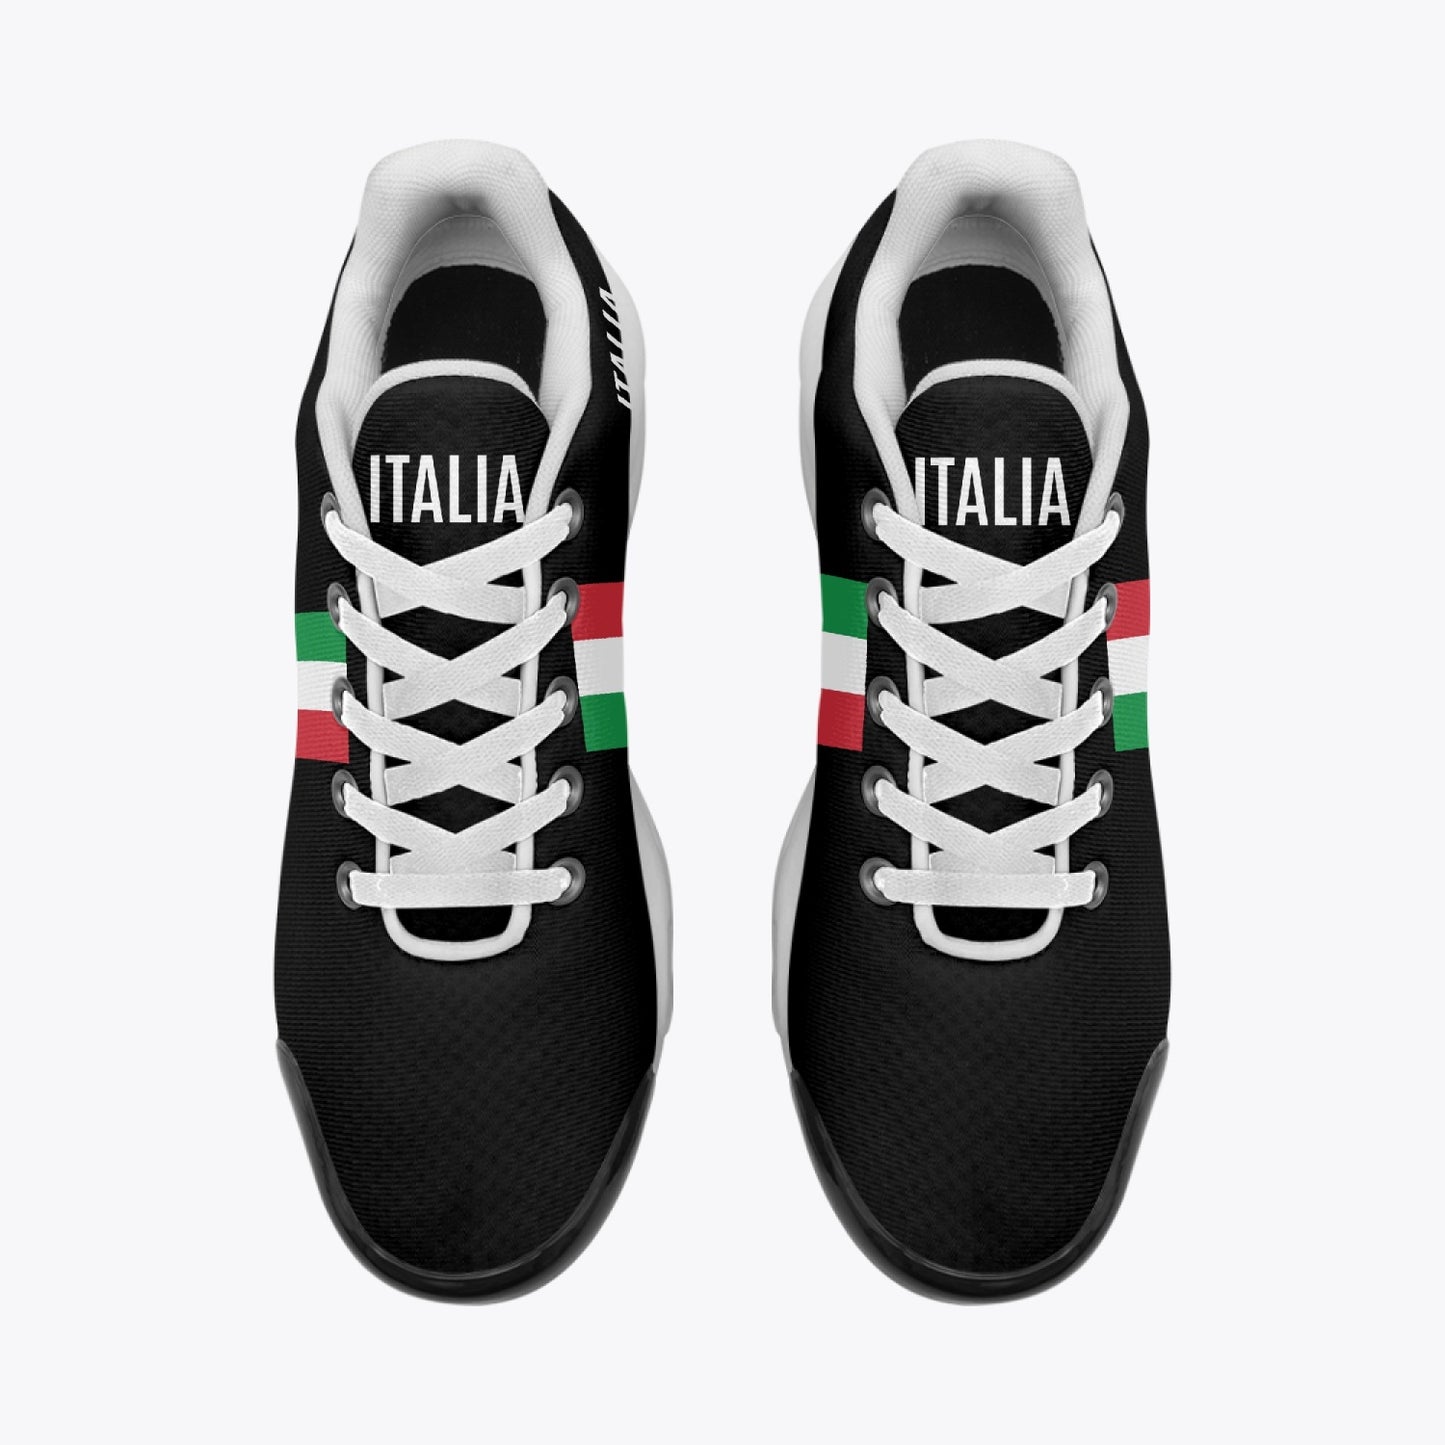 Italia Bounce Sneakers - Black